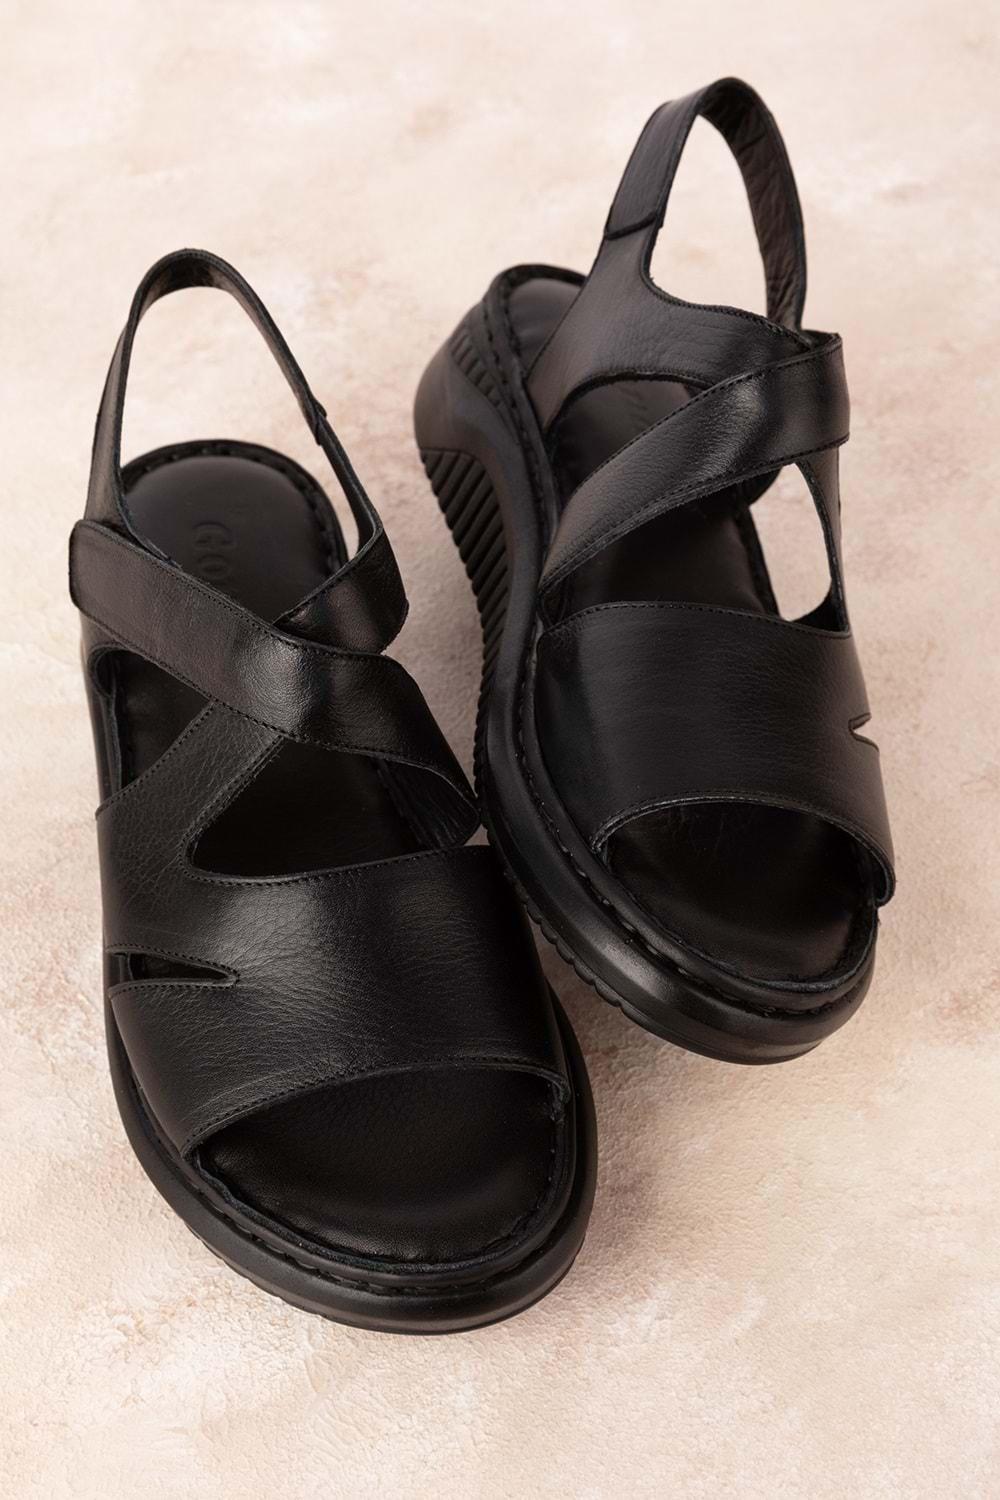 Gondol Hakiki Deri Ortopedik Taban Rahat Günlük Sandalet ımk.073 - Siyah - 40